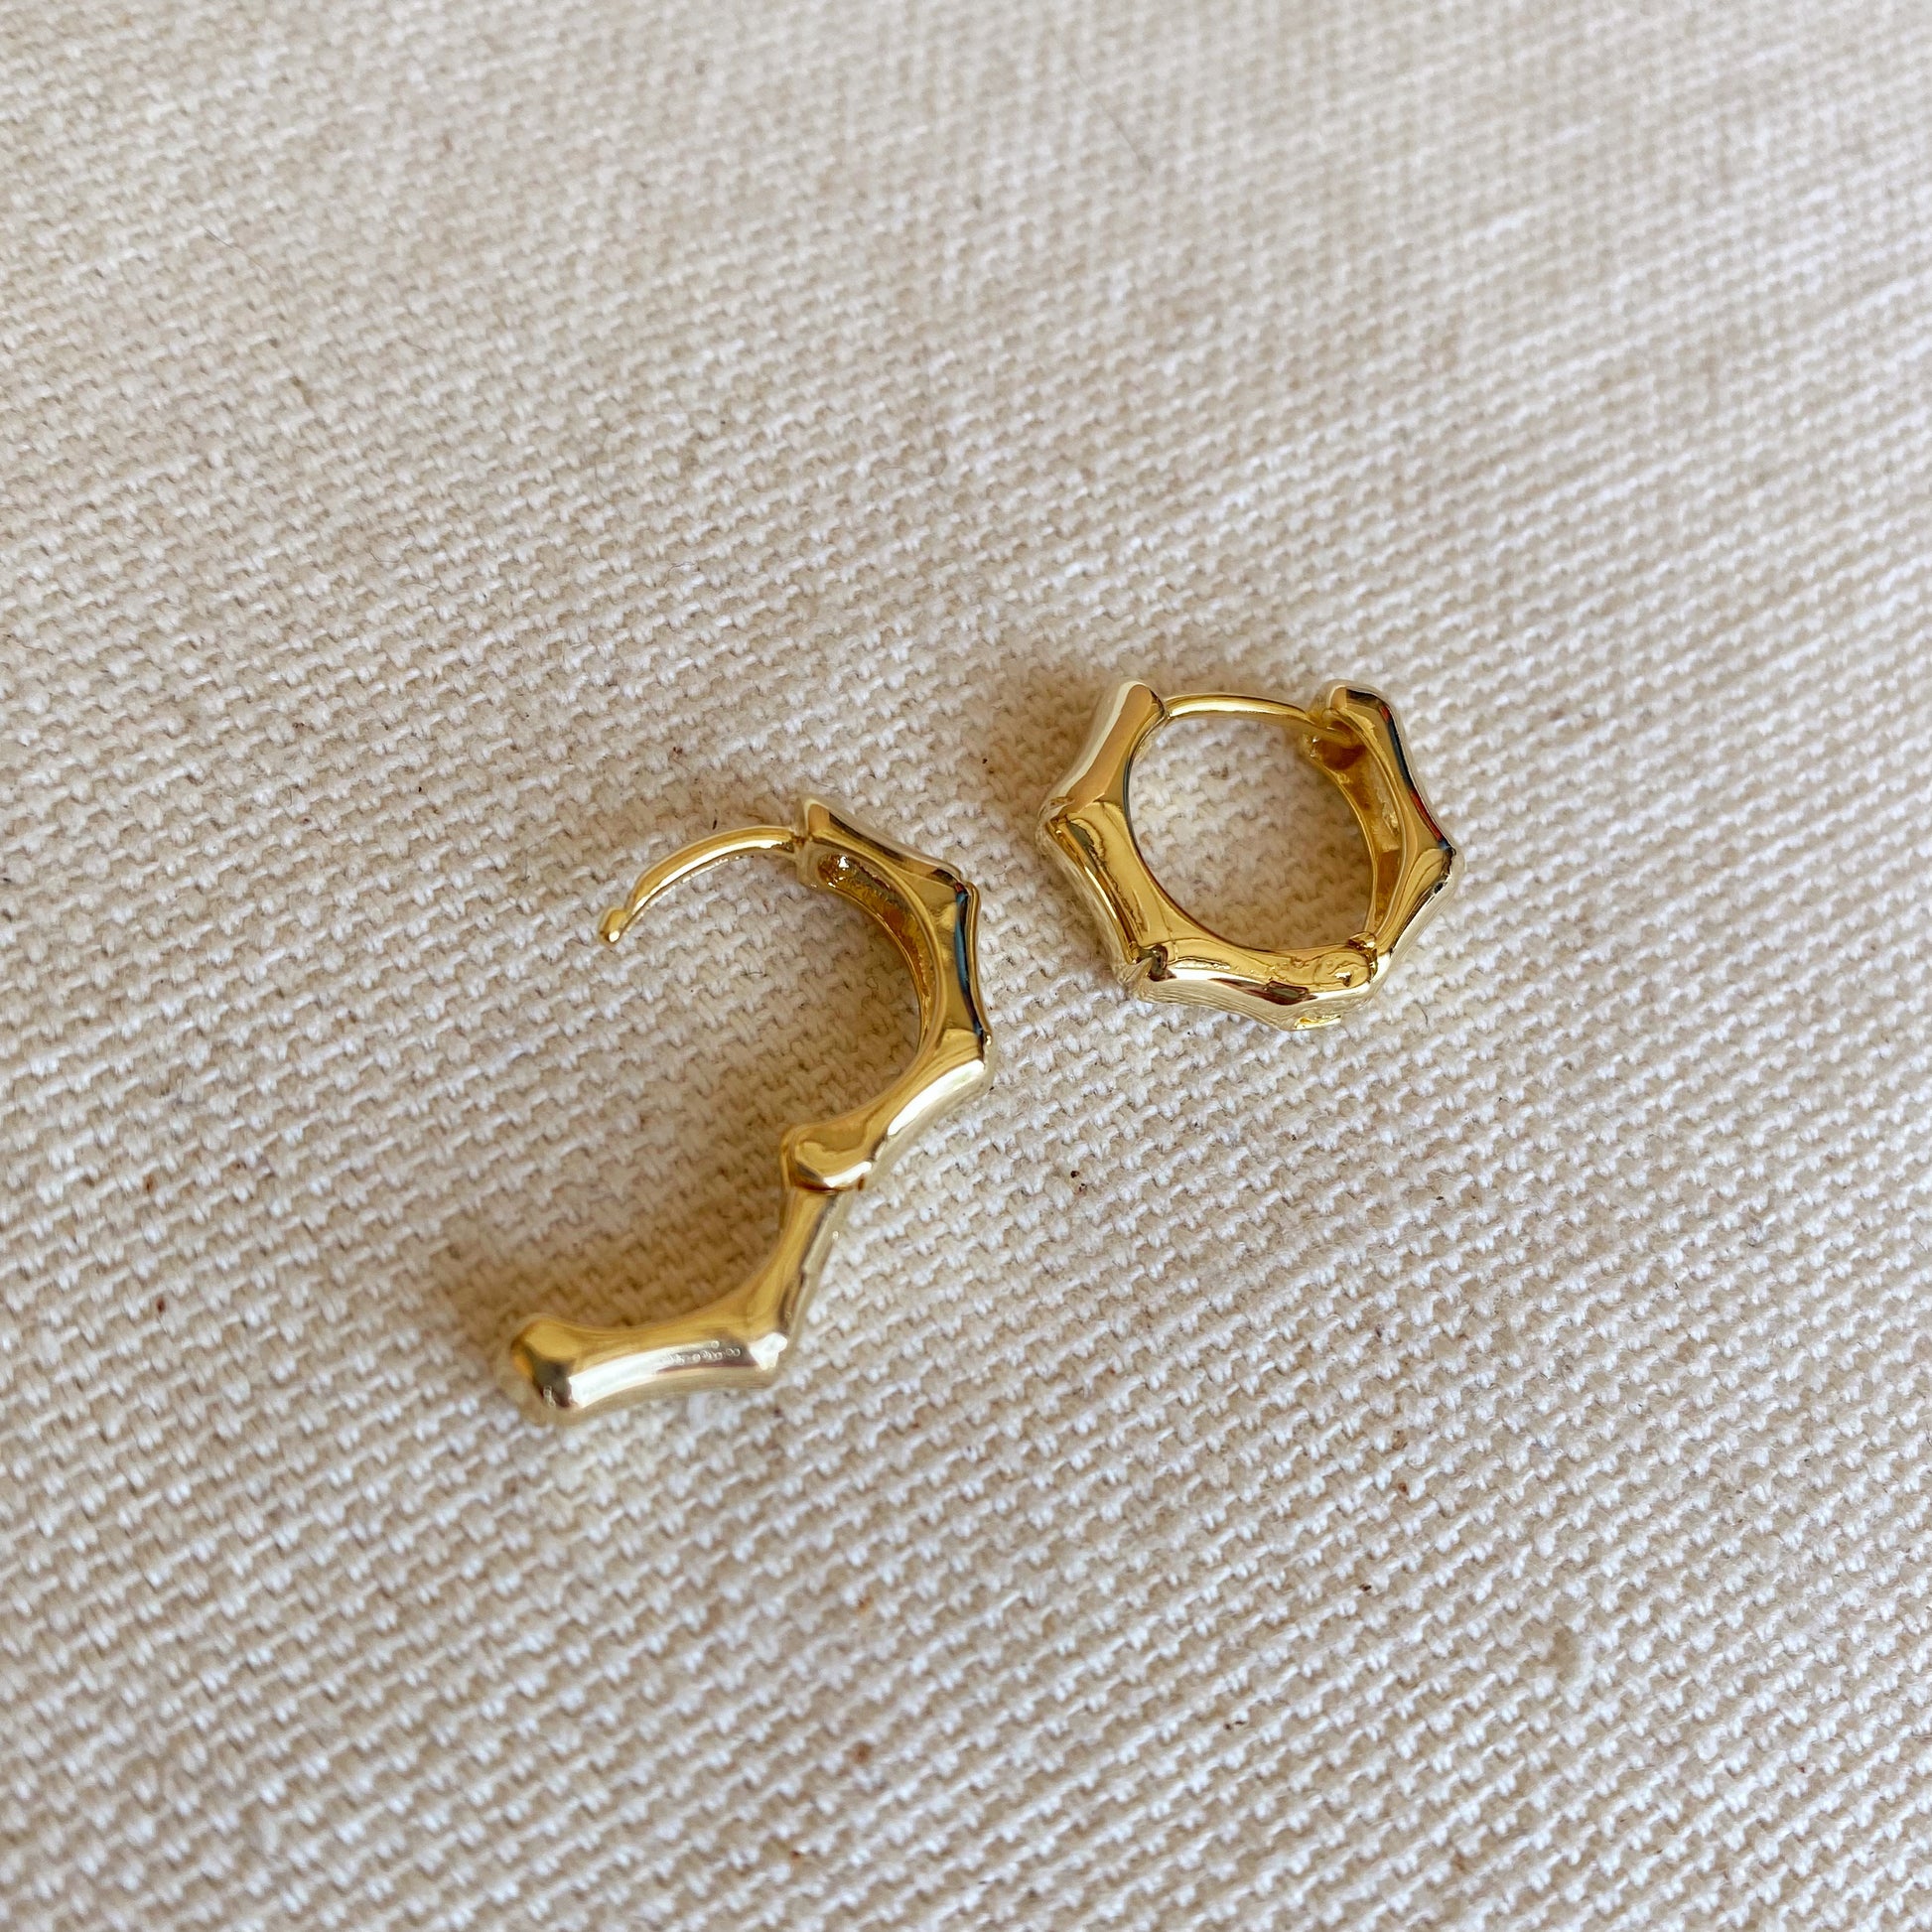 GoldFi 18k Gold Filled Bamboo Clicker Hoop Earrings